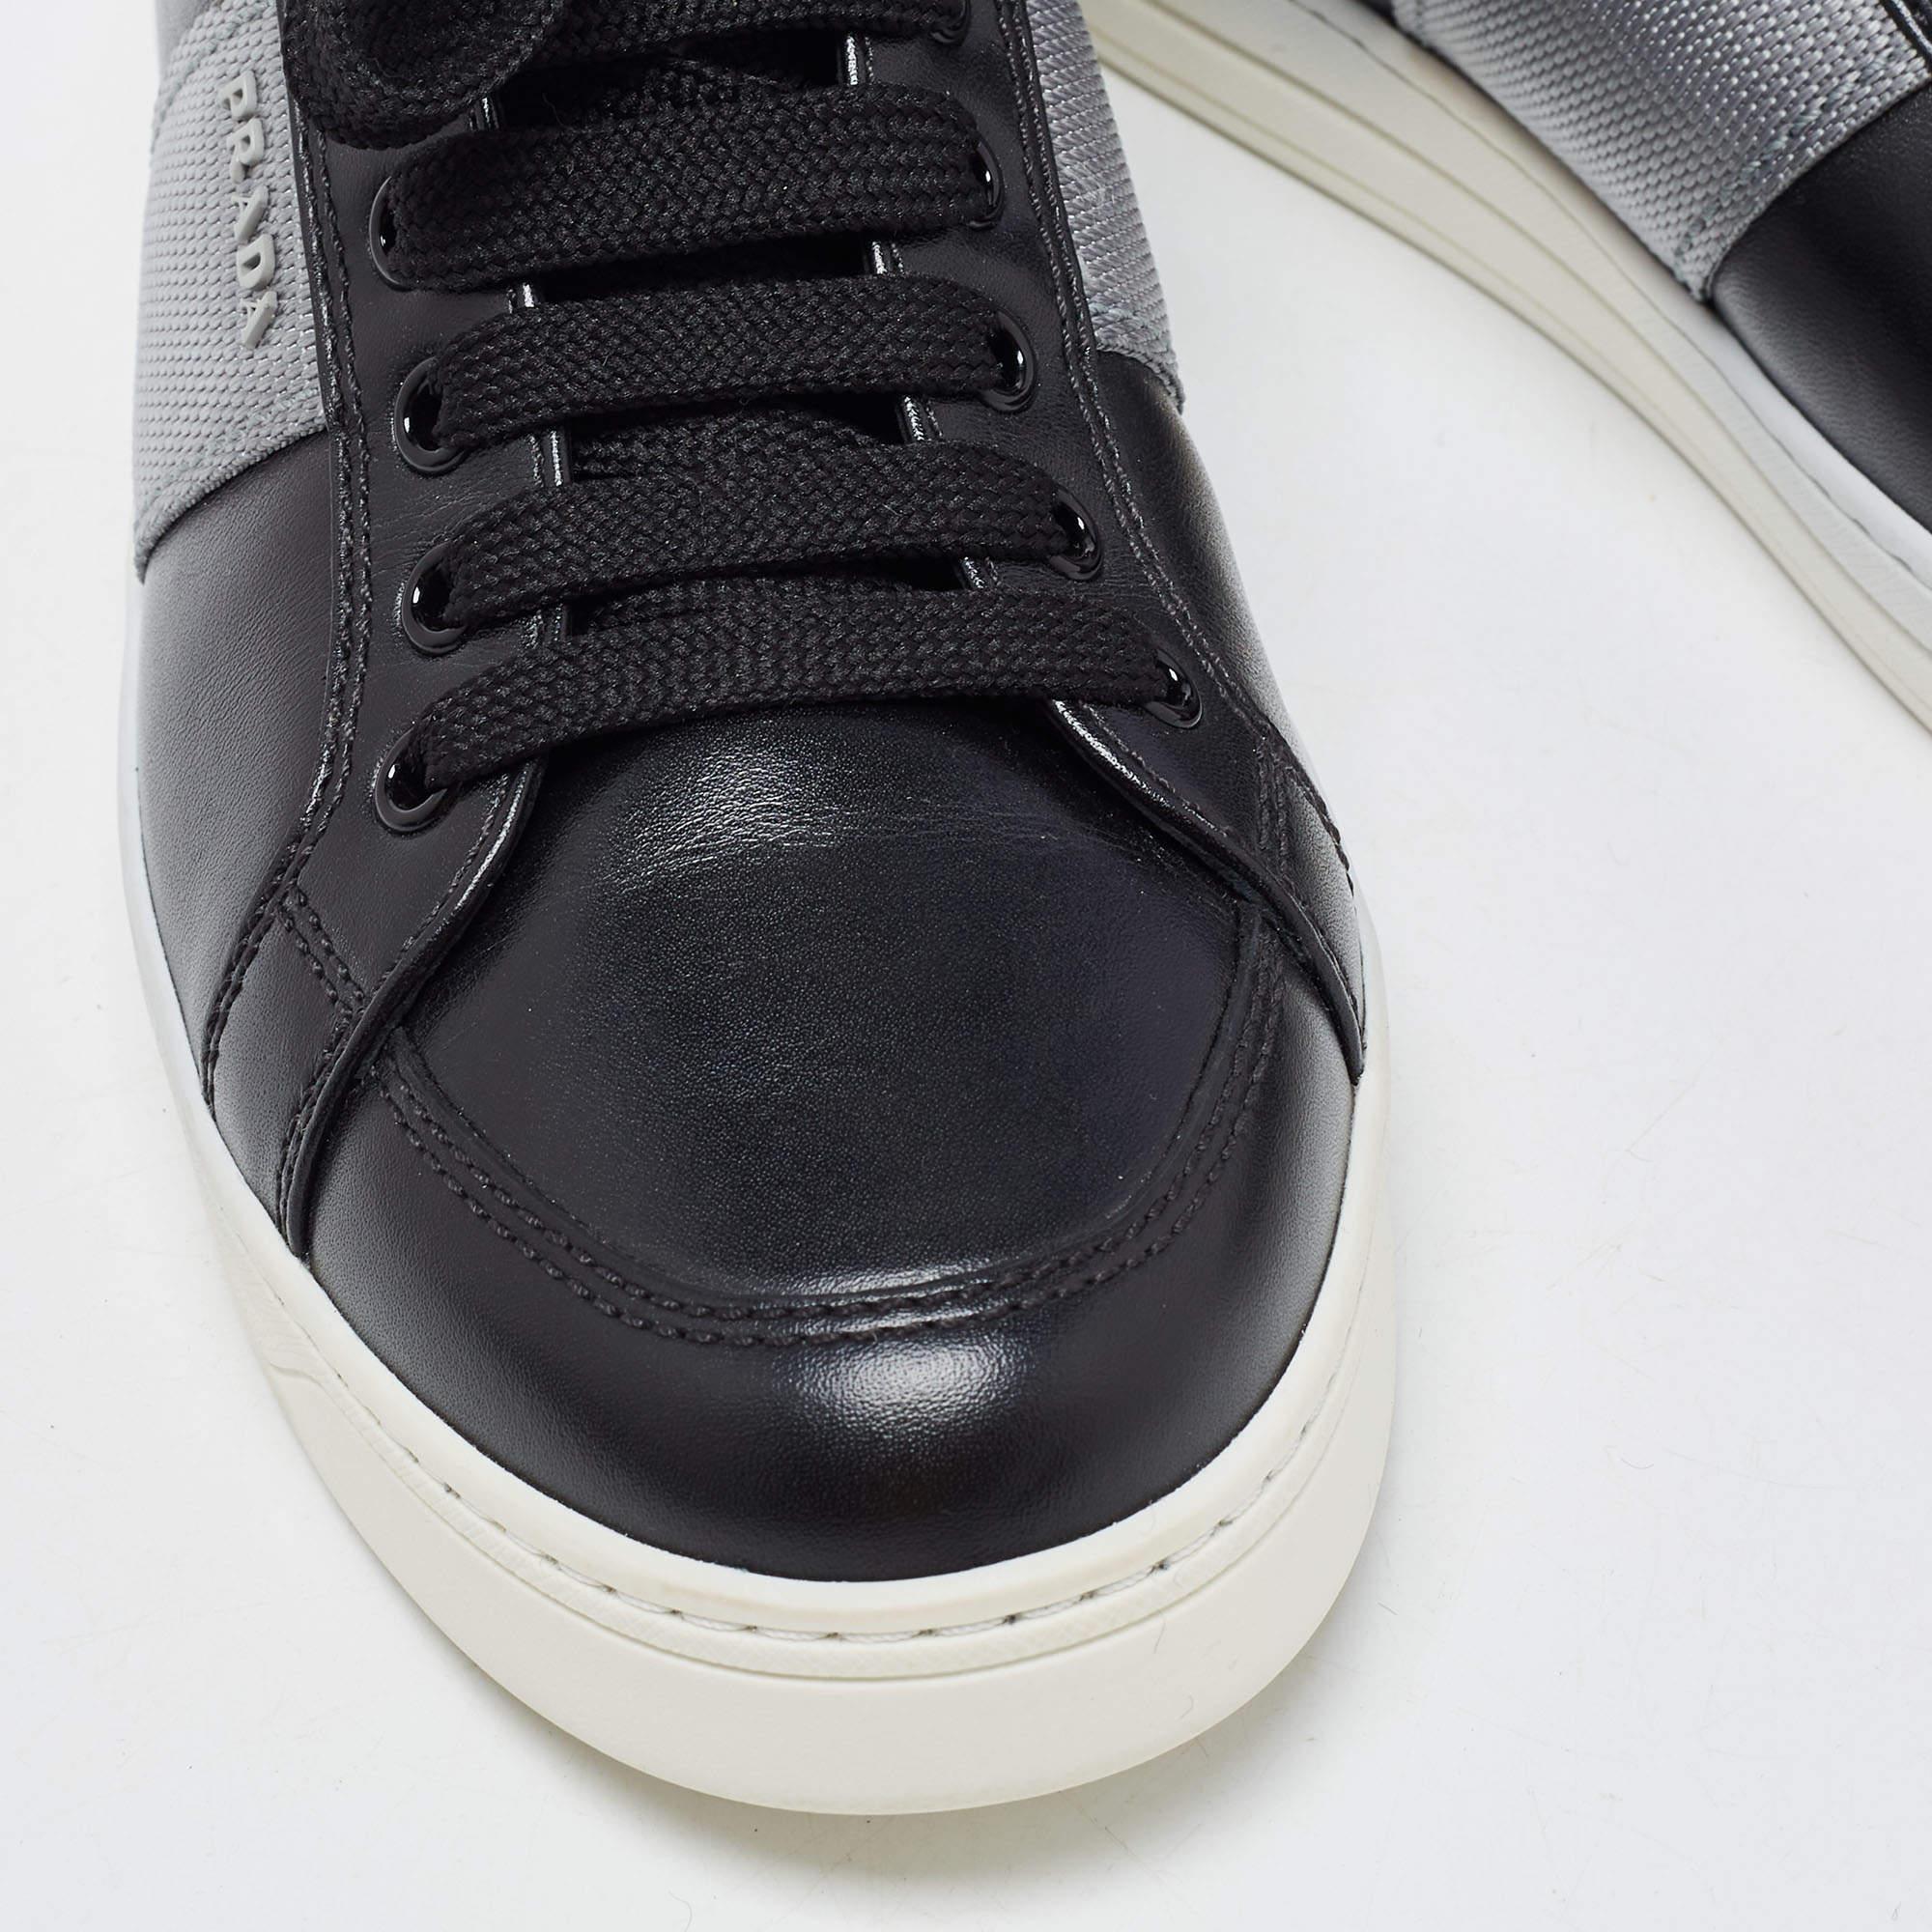 Prada Black Leather Low Top Sneakers Size 38 2